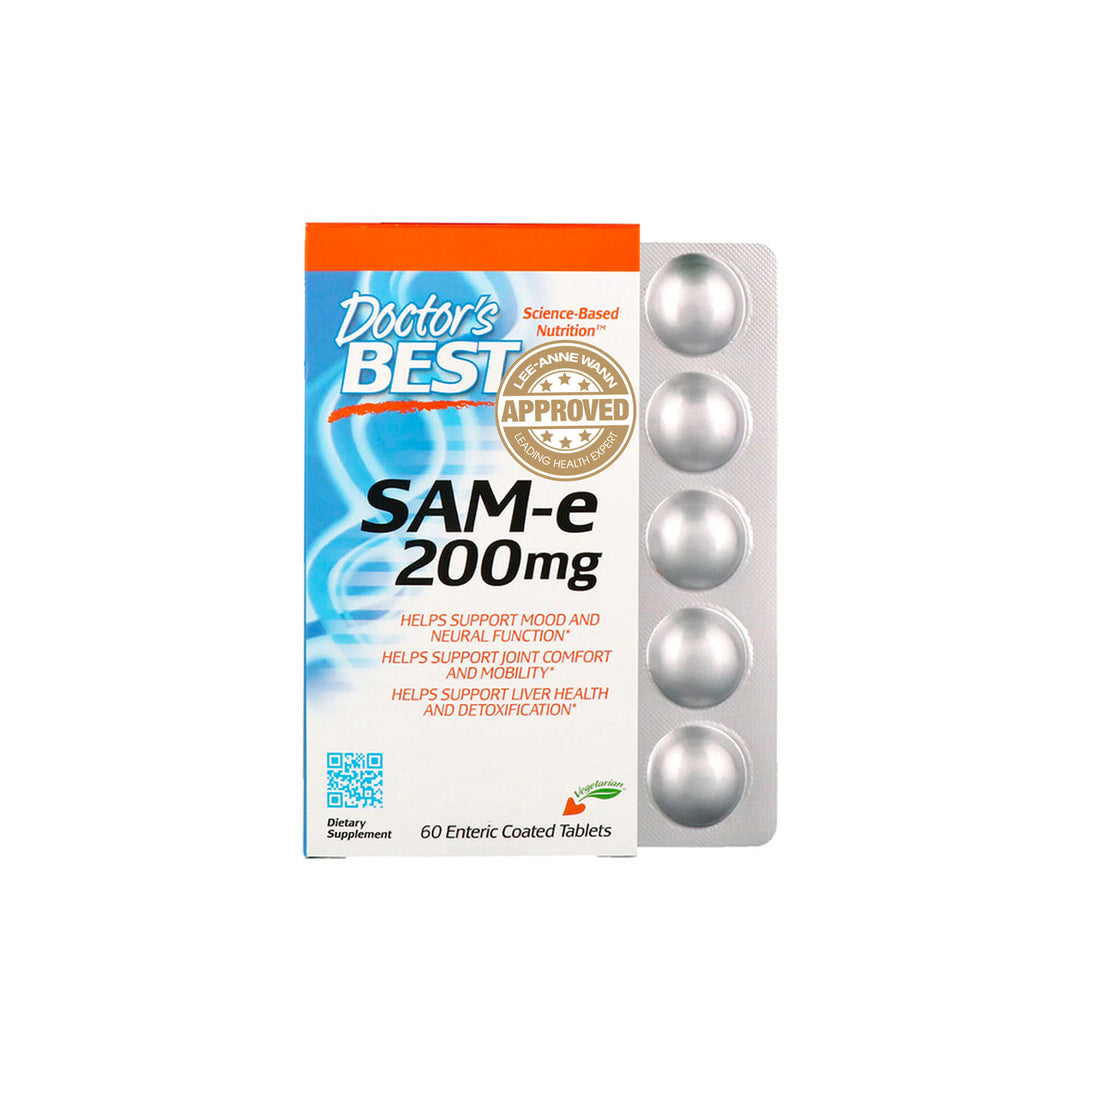 SAM-e – Improve Mood, Joints, Support Liver & Detoxification